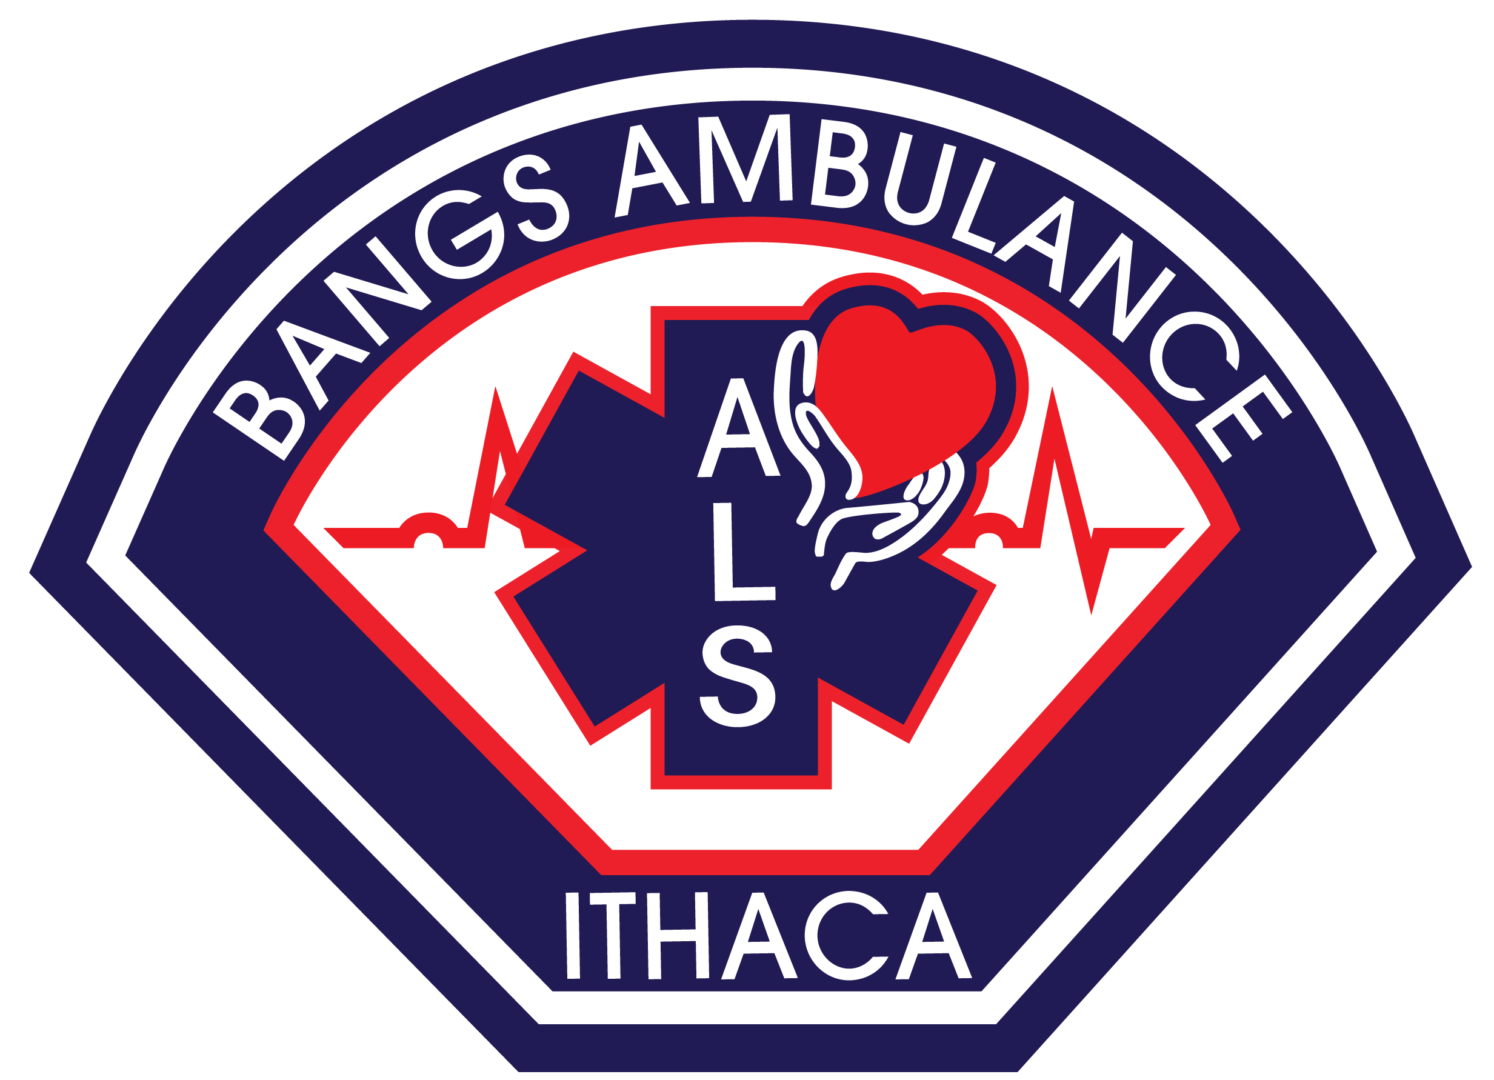 Bangs ambulance logo